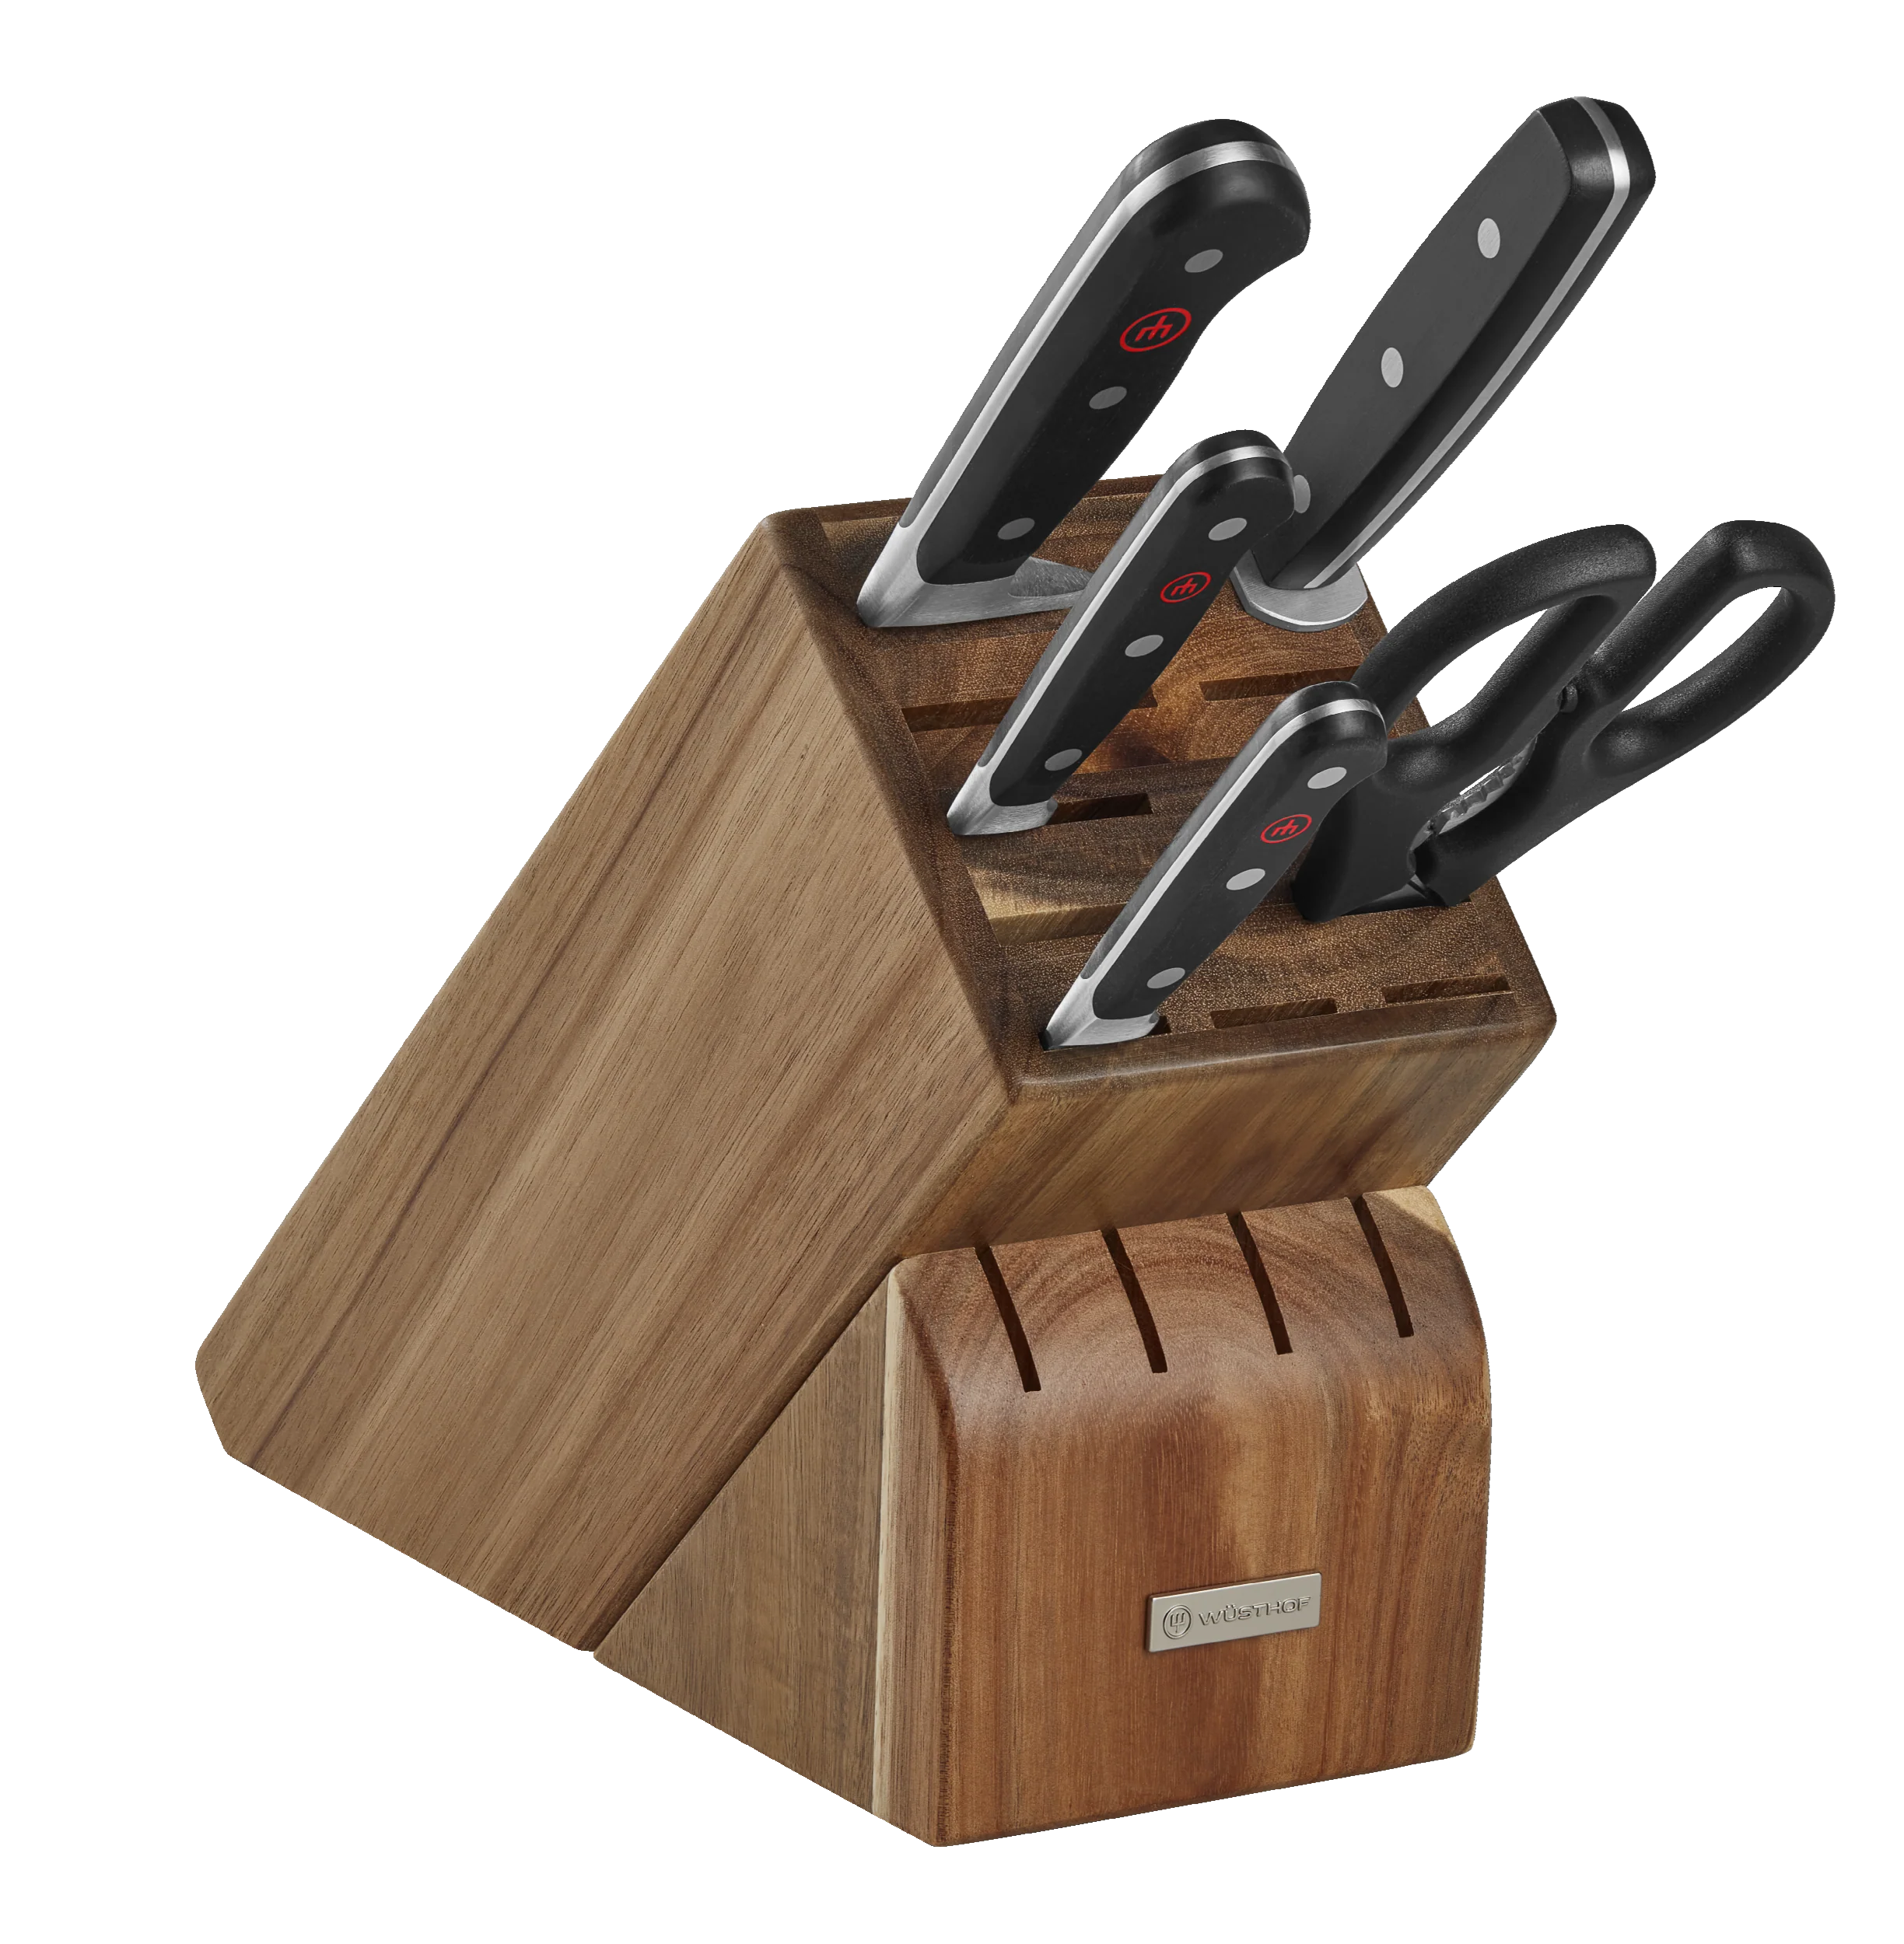 Wusthof Classic 6-Piece Starter Knife Acacia Block Set